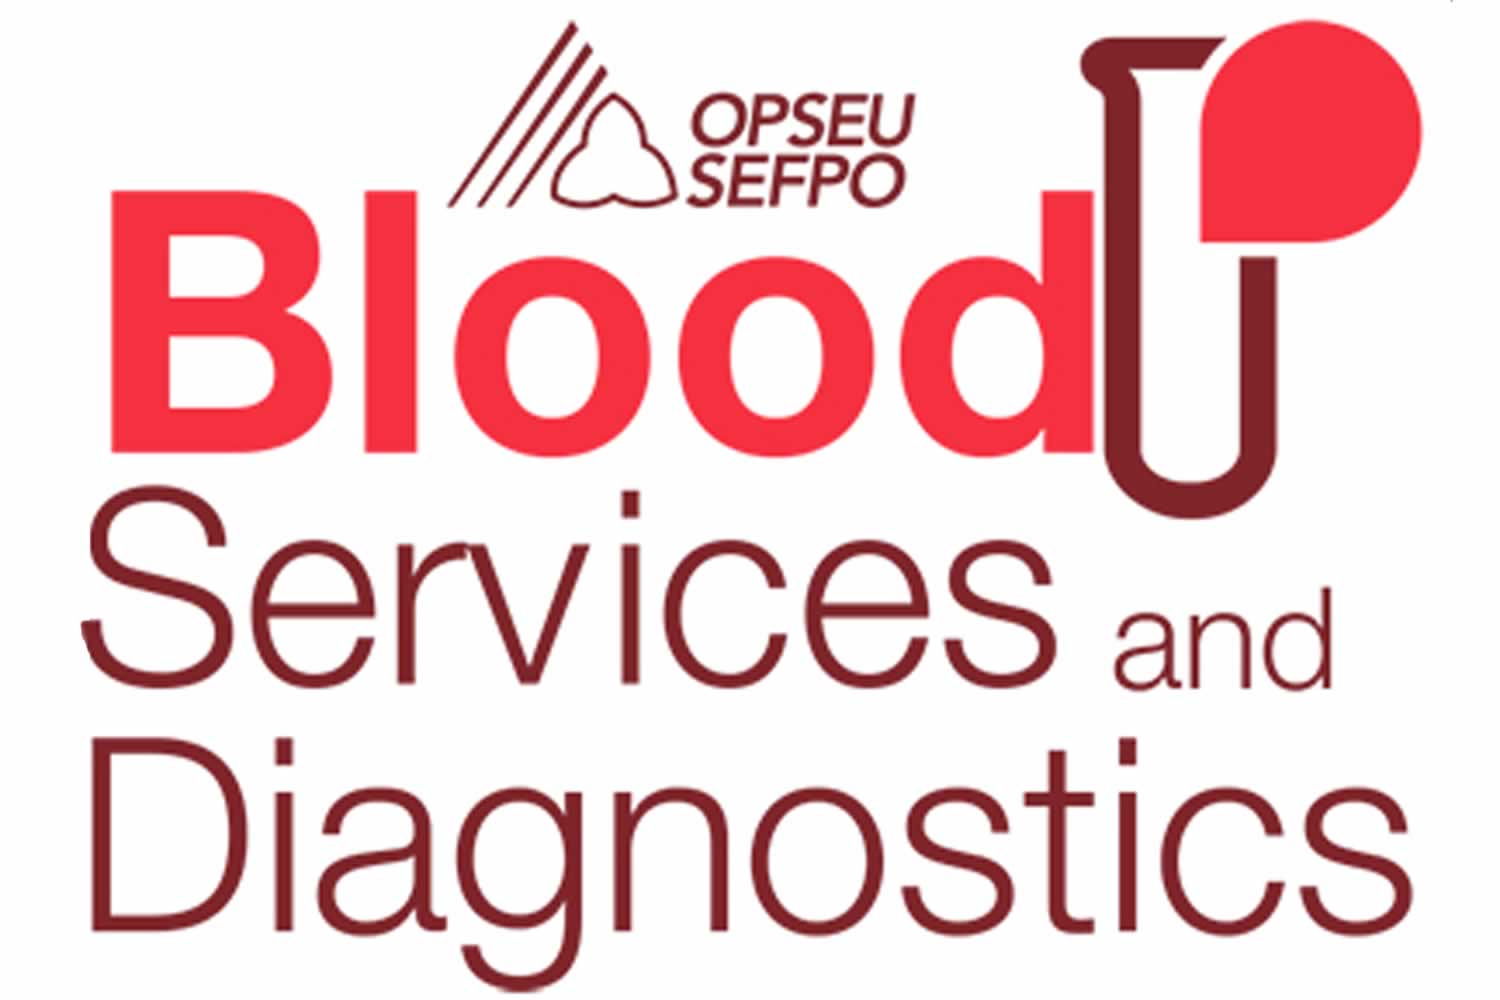 Canadian Blood Services and Diagnostics logo